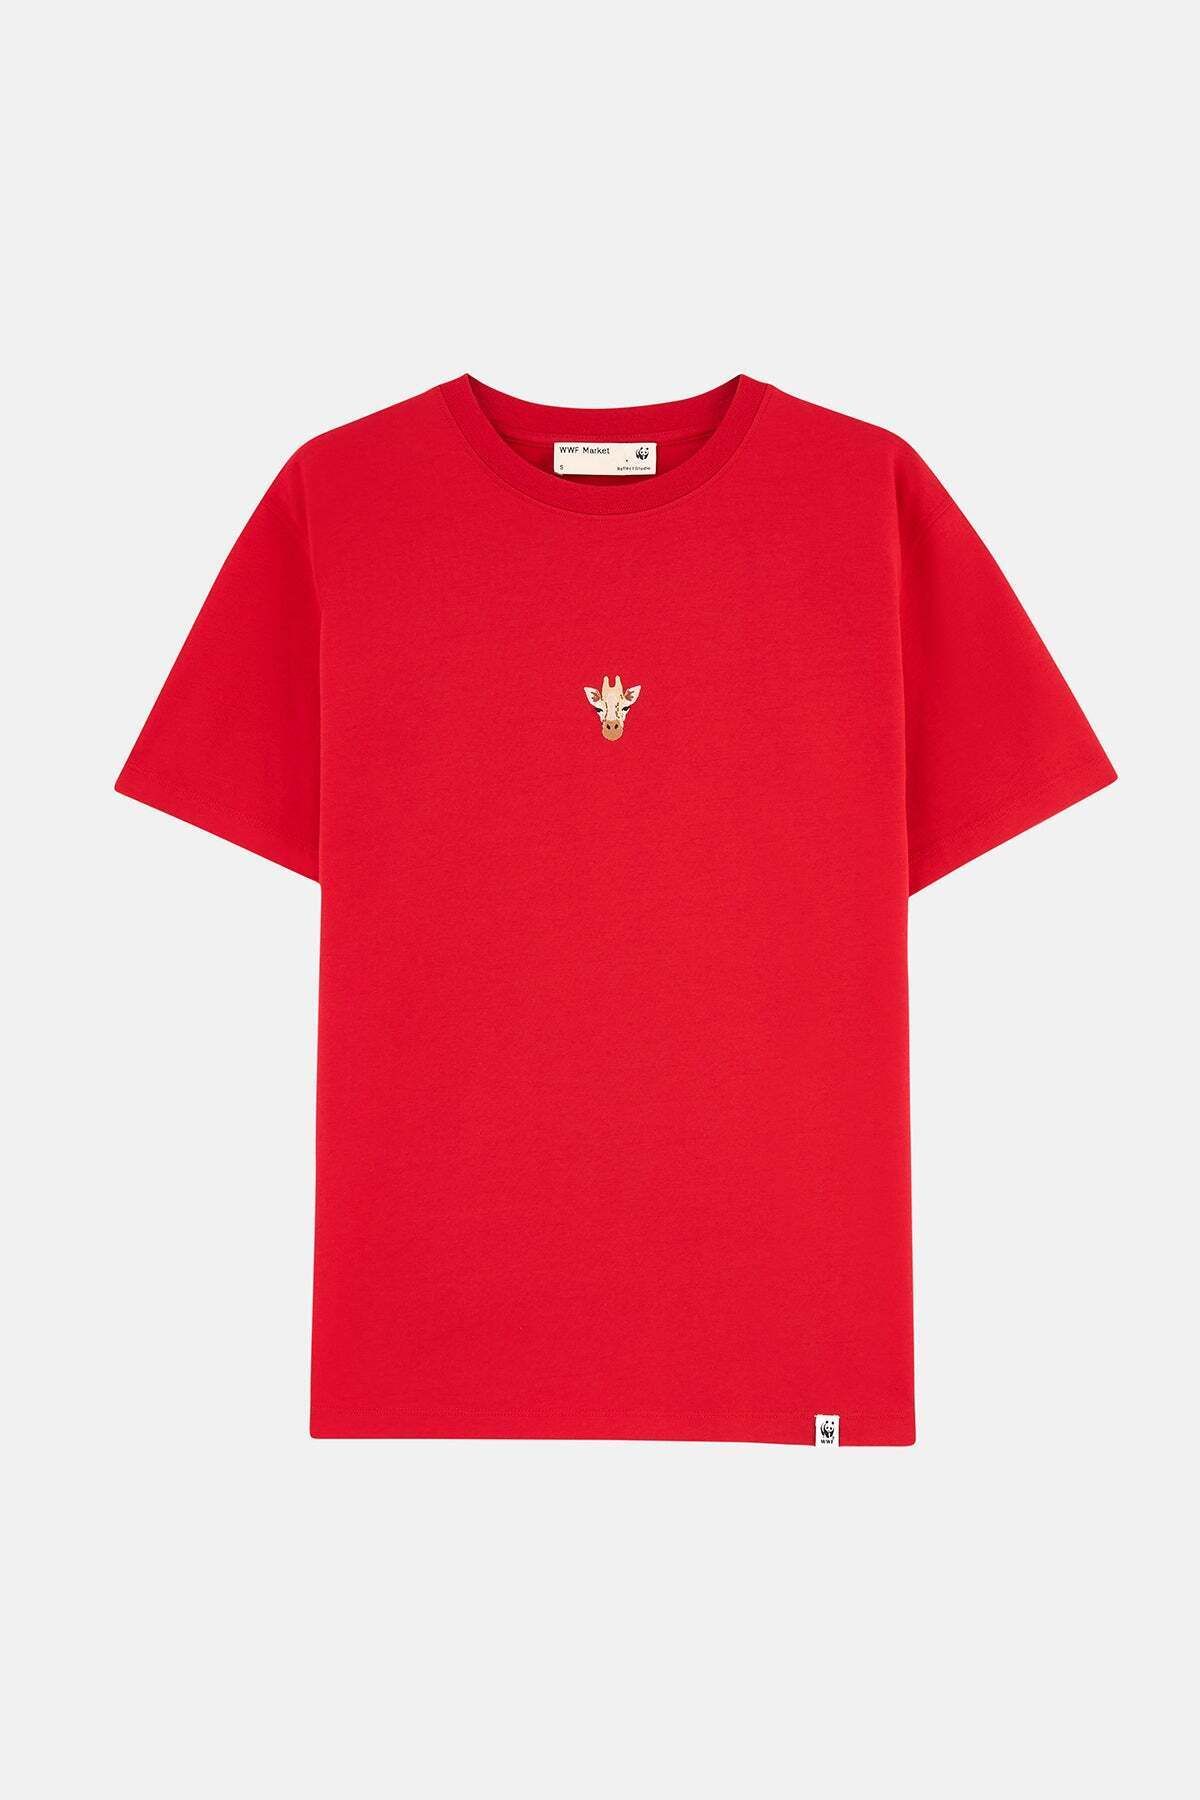 WWF Market Zürafa Supreme T-shirt - Kırmızı